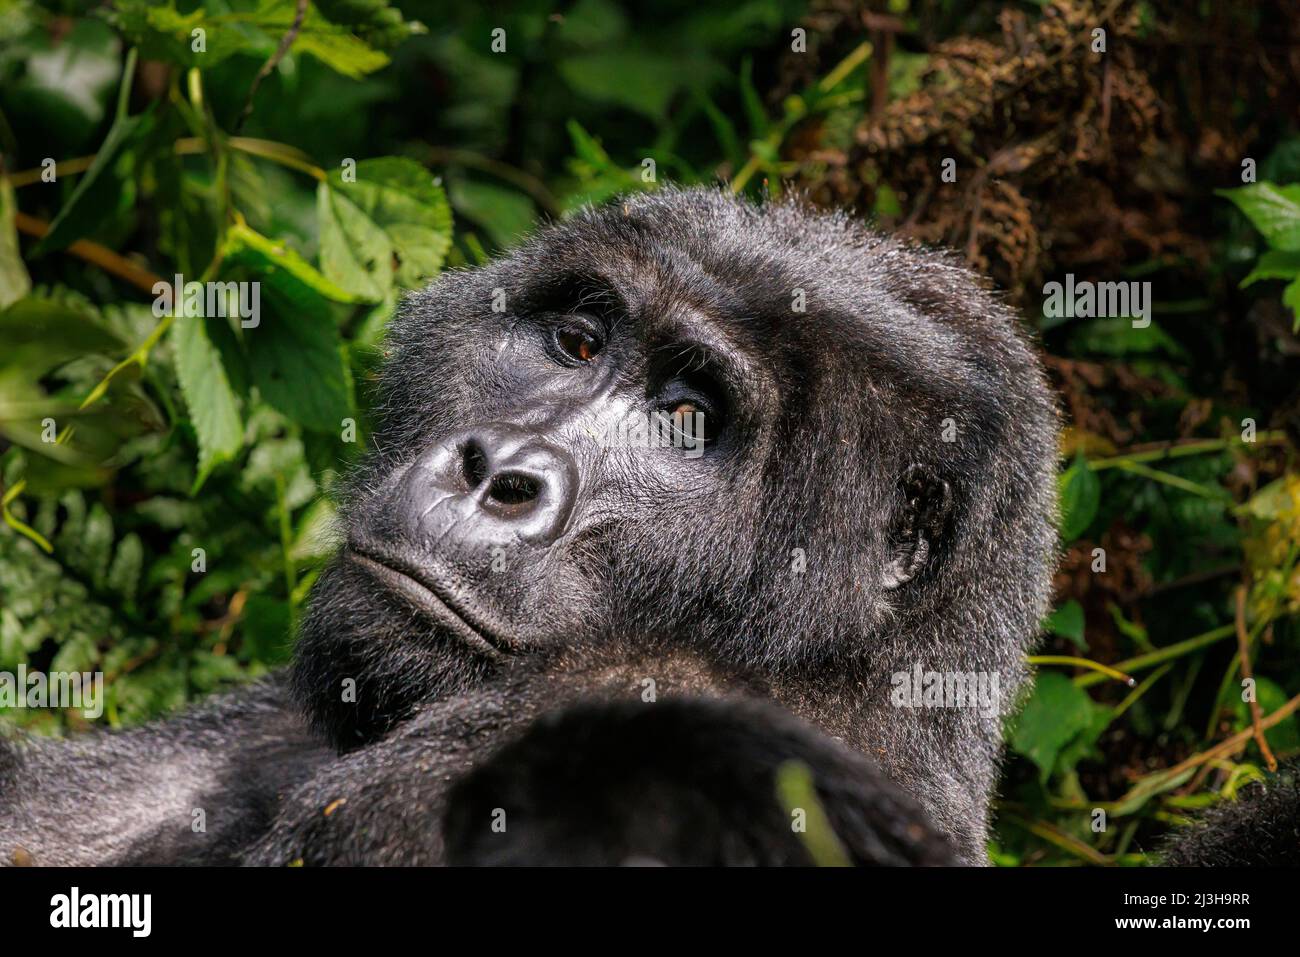 Uganda, Kanungu district, Ruhija, Bwindi impenetrable national Park listed as World Heritage by UNESCO, mountain silverback gorilla Stock Photo